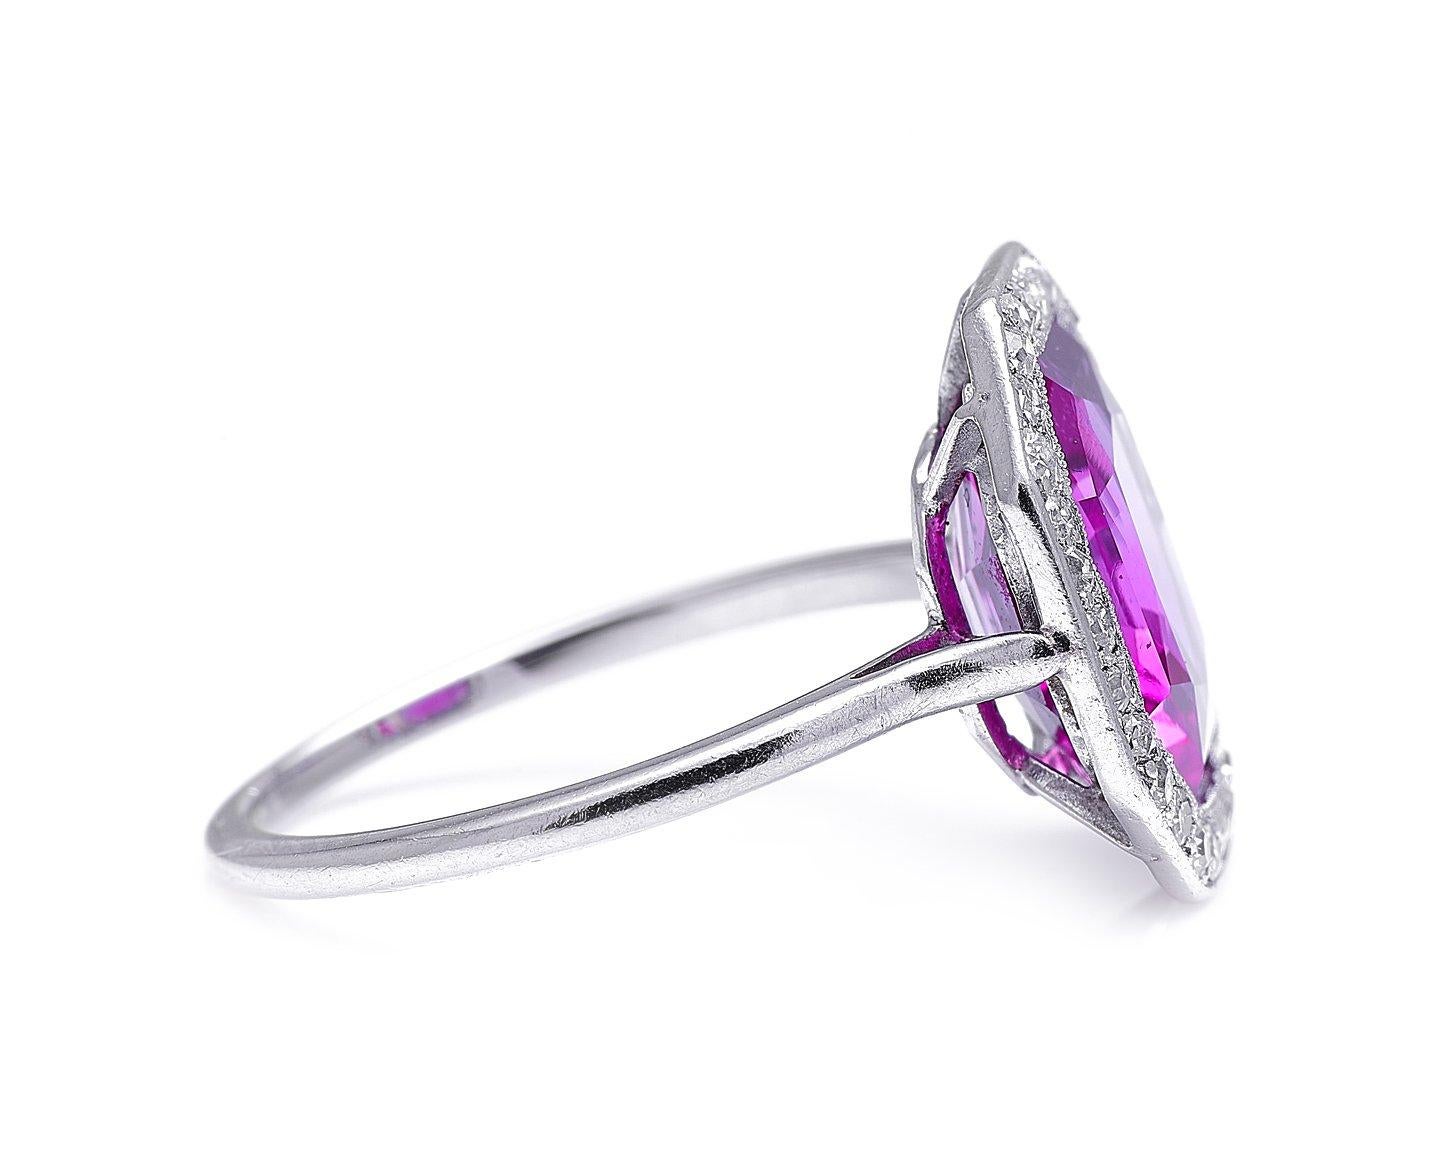 4 carat pink sapphire ring